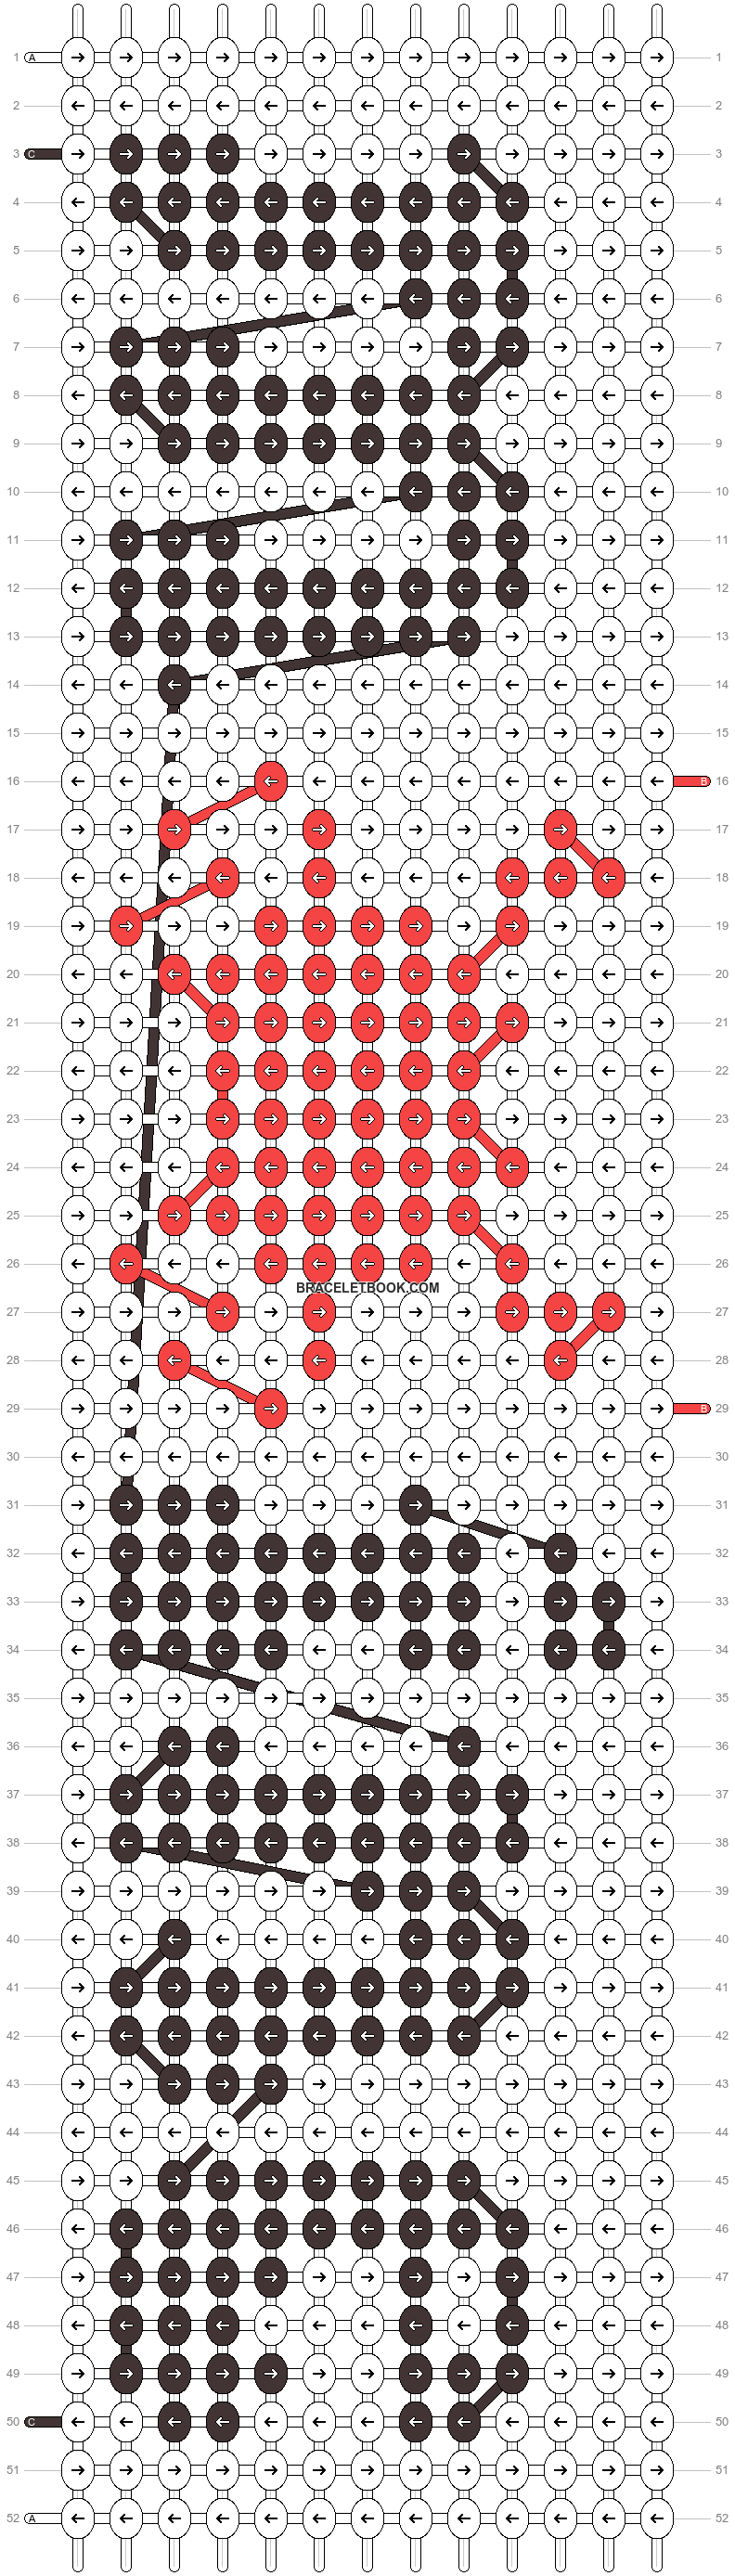 Alpha pattern #53597 pattern